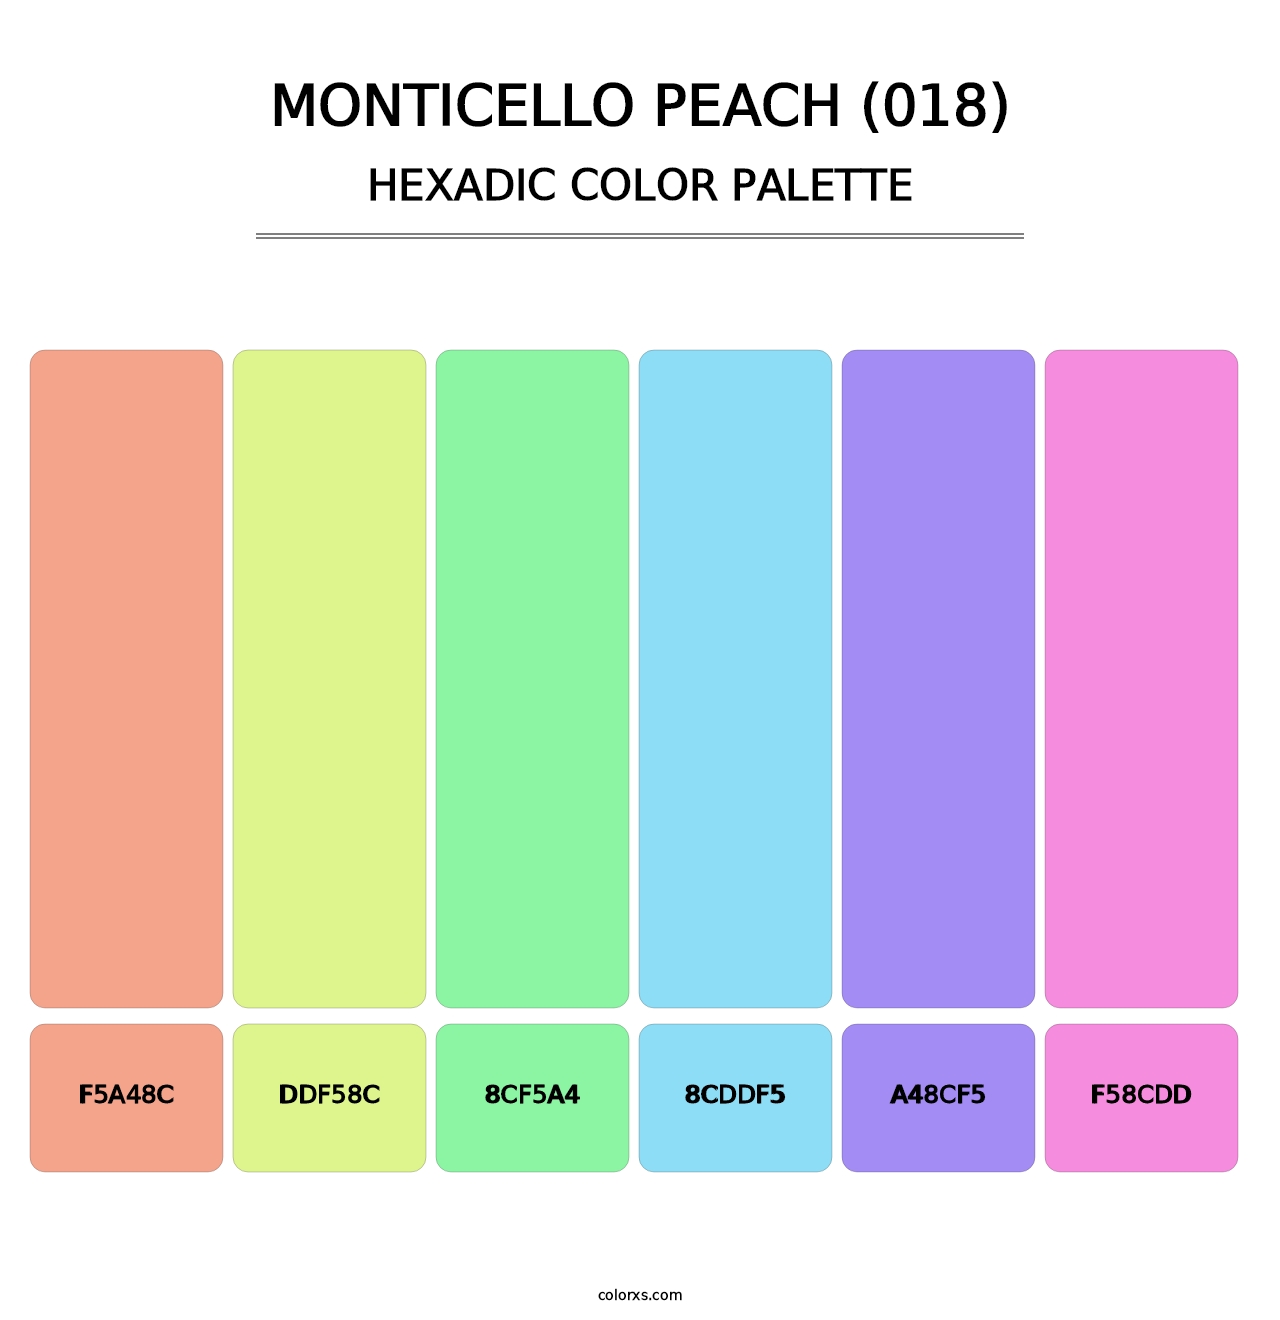 Monticello Peach (018) - Hexadic Color Palette